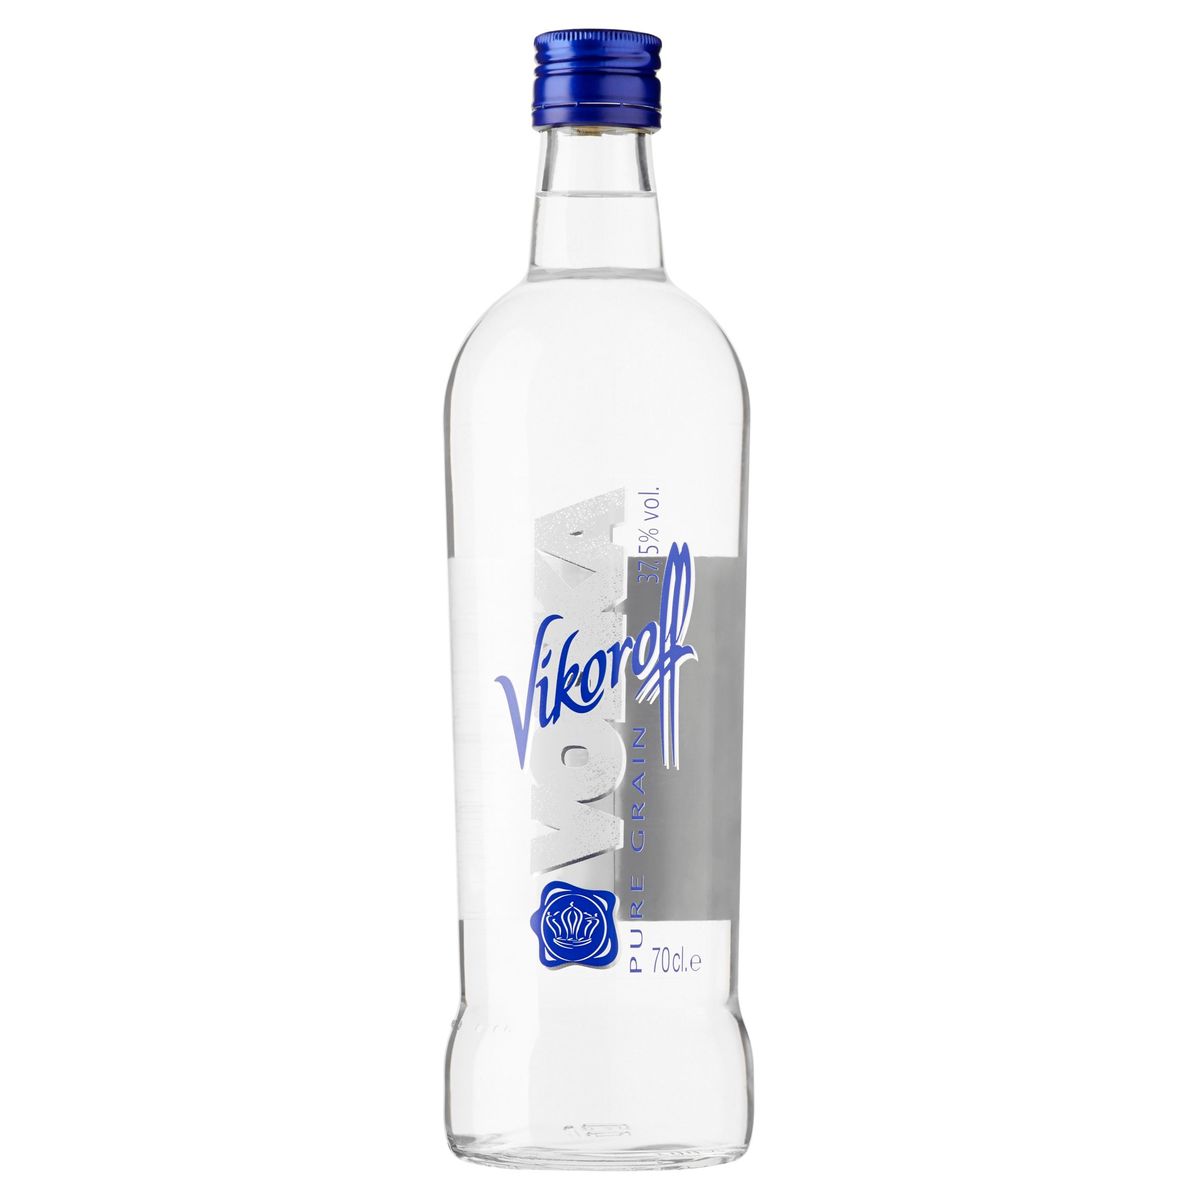 Vikoroff Vodka Pure Grain 70 cl